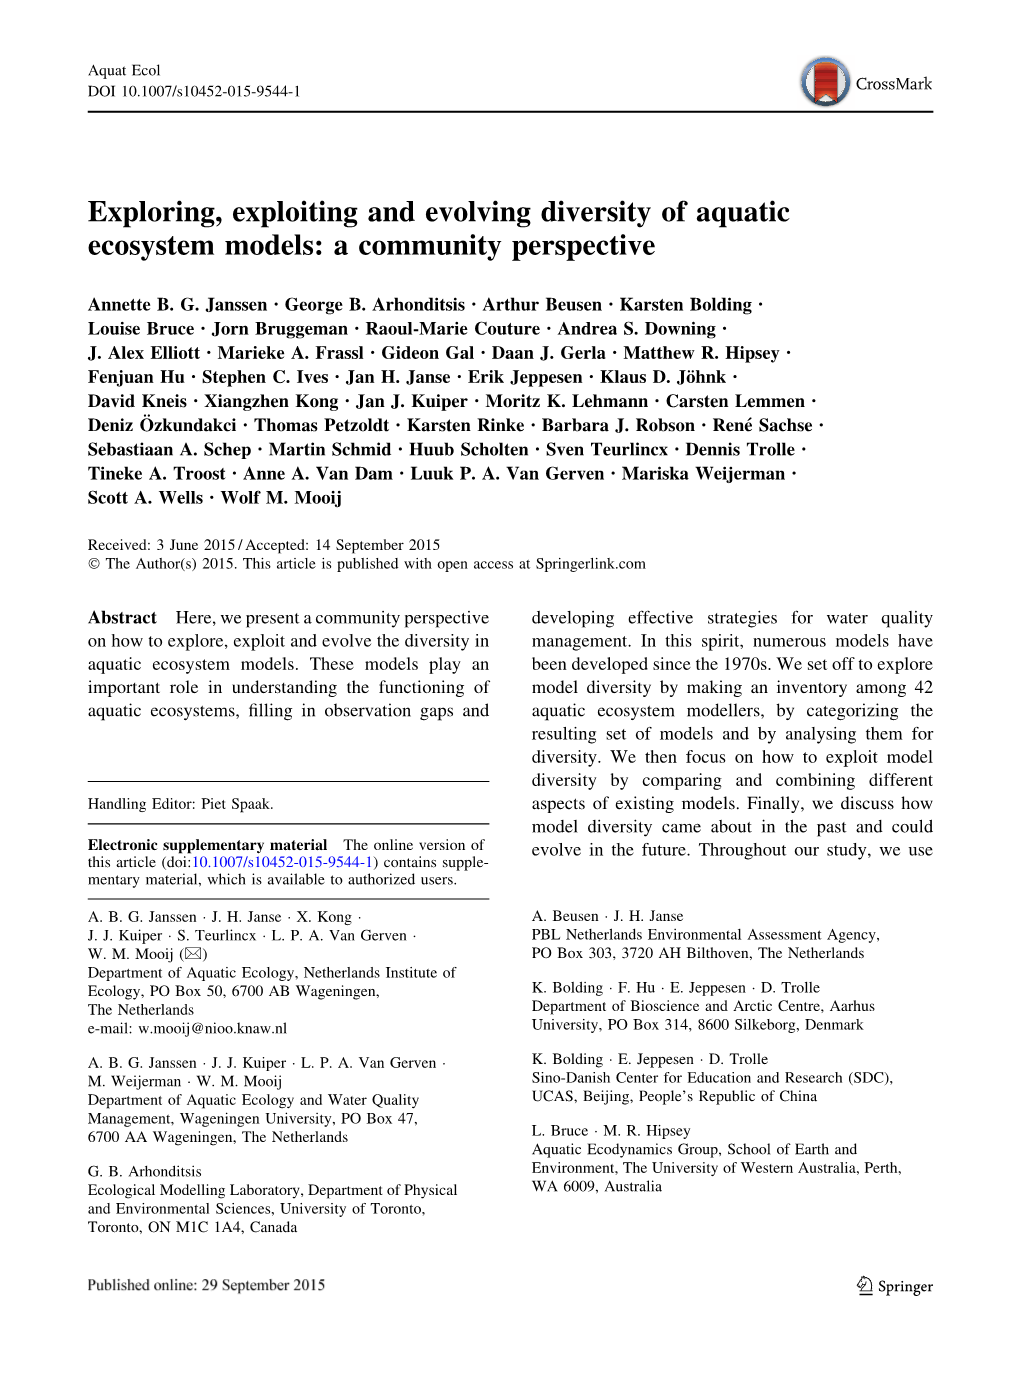 Exploring, Exploiting and Evolving Diversity of Aquatic Ecosystem Models: a Community Perspective